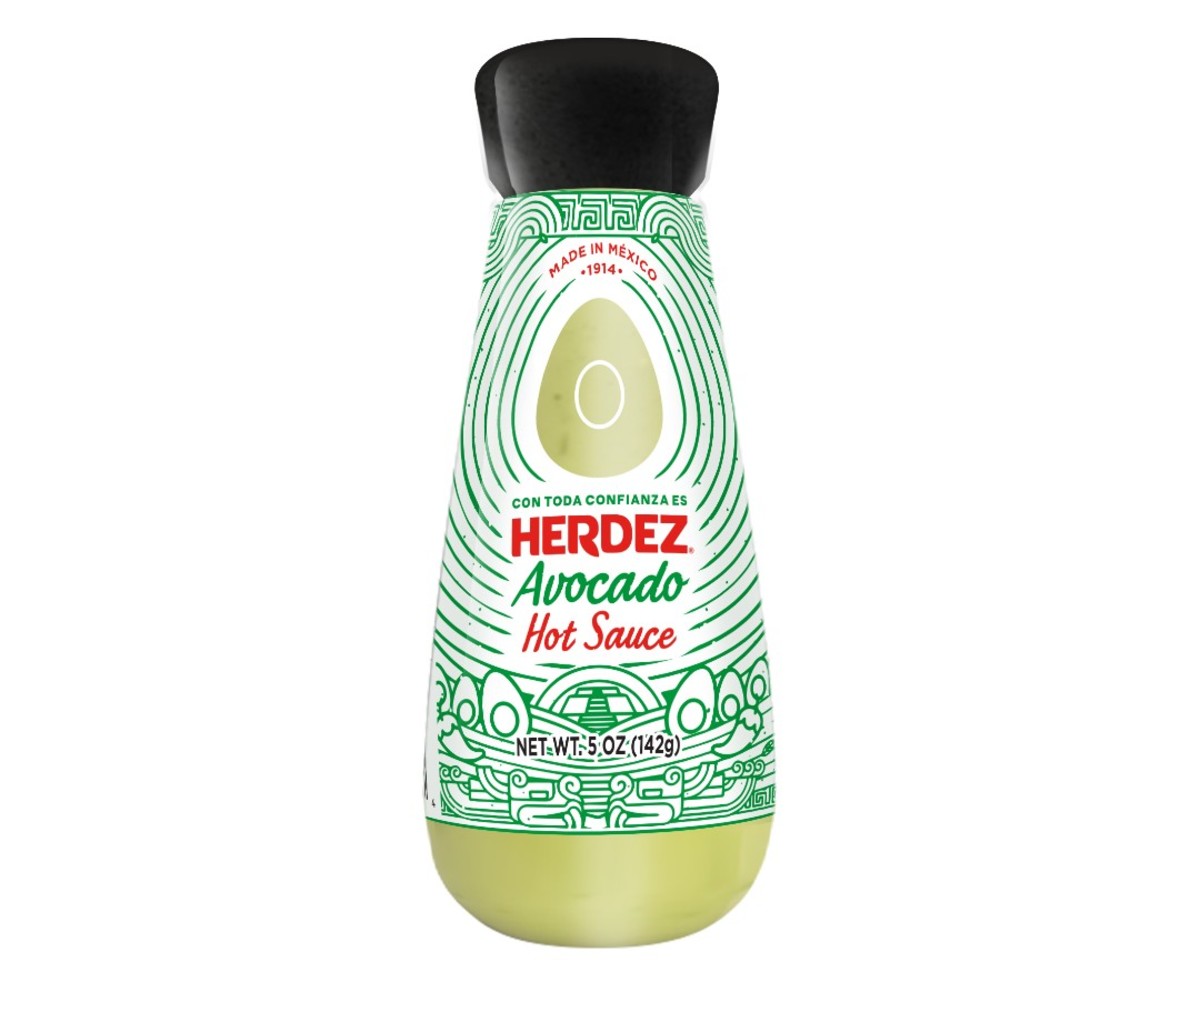 HERDEZ Avocado Hot Sauce against white background